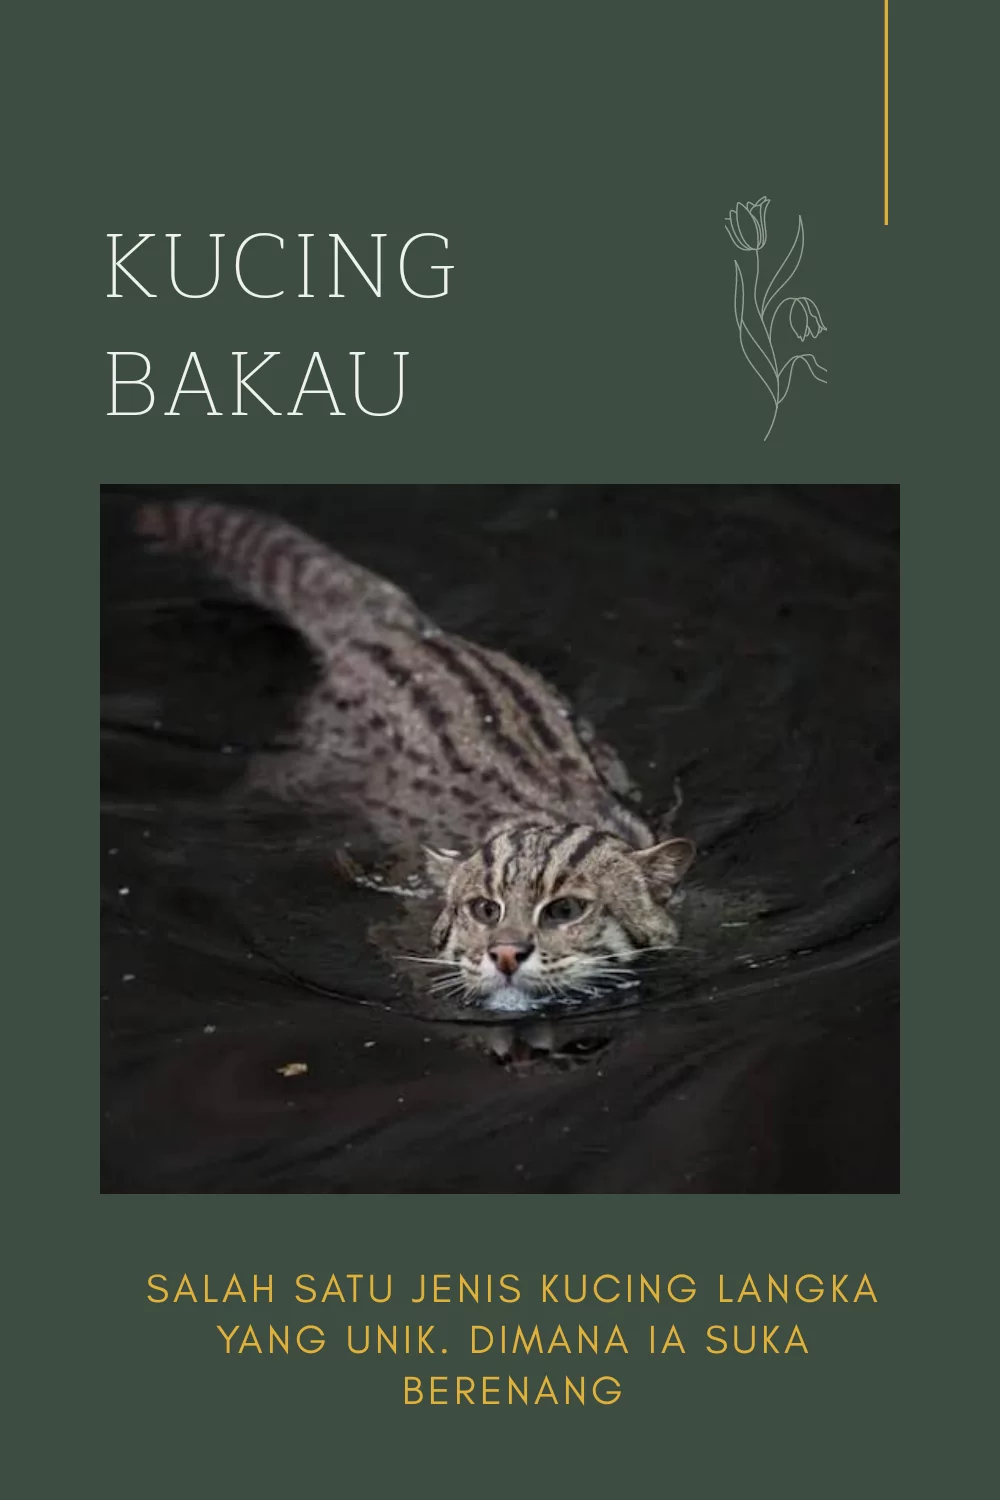 Kucing bakau, kucing hutan yang dilindungi pemerintah